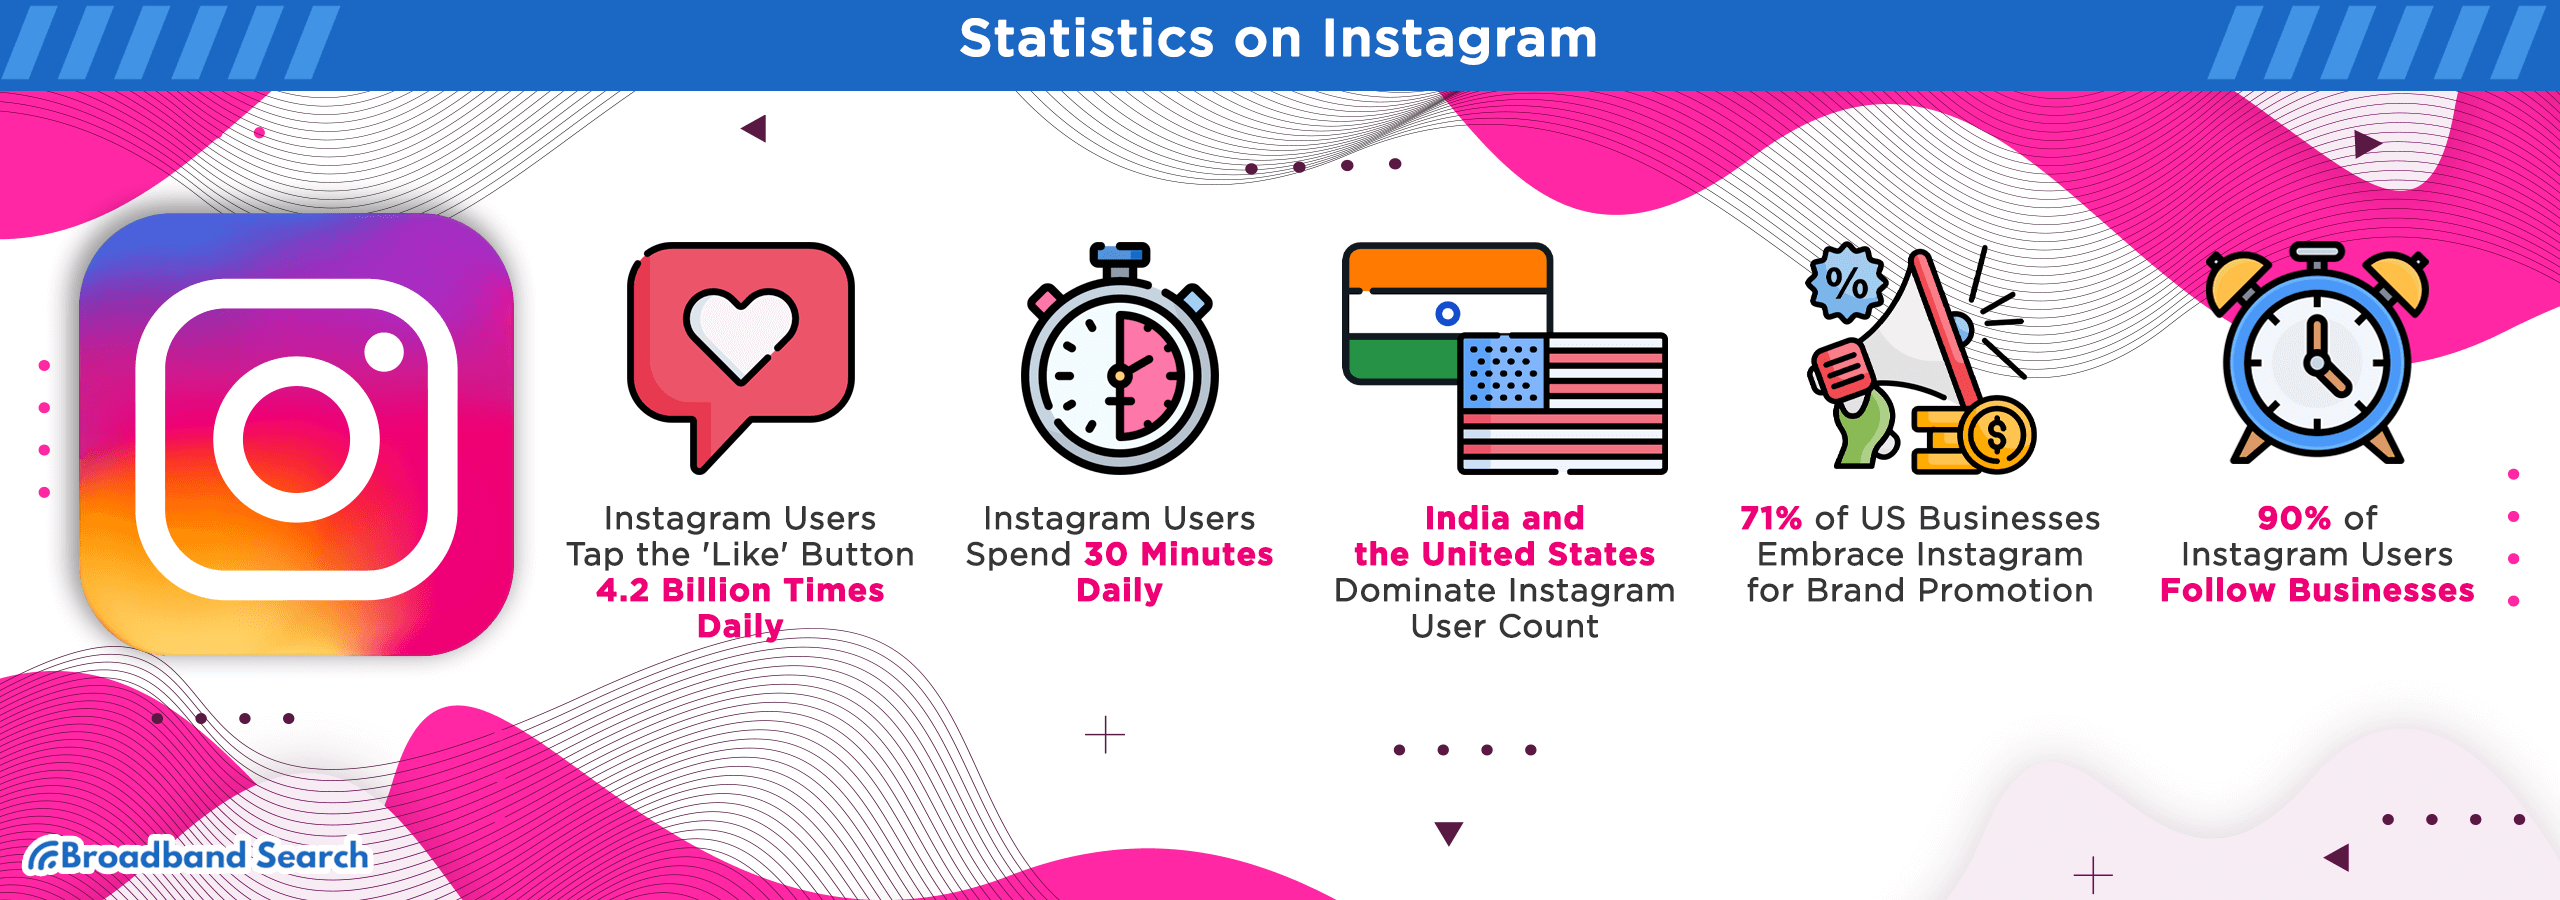 five statistics about Instagram